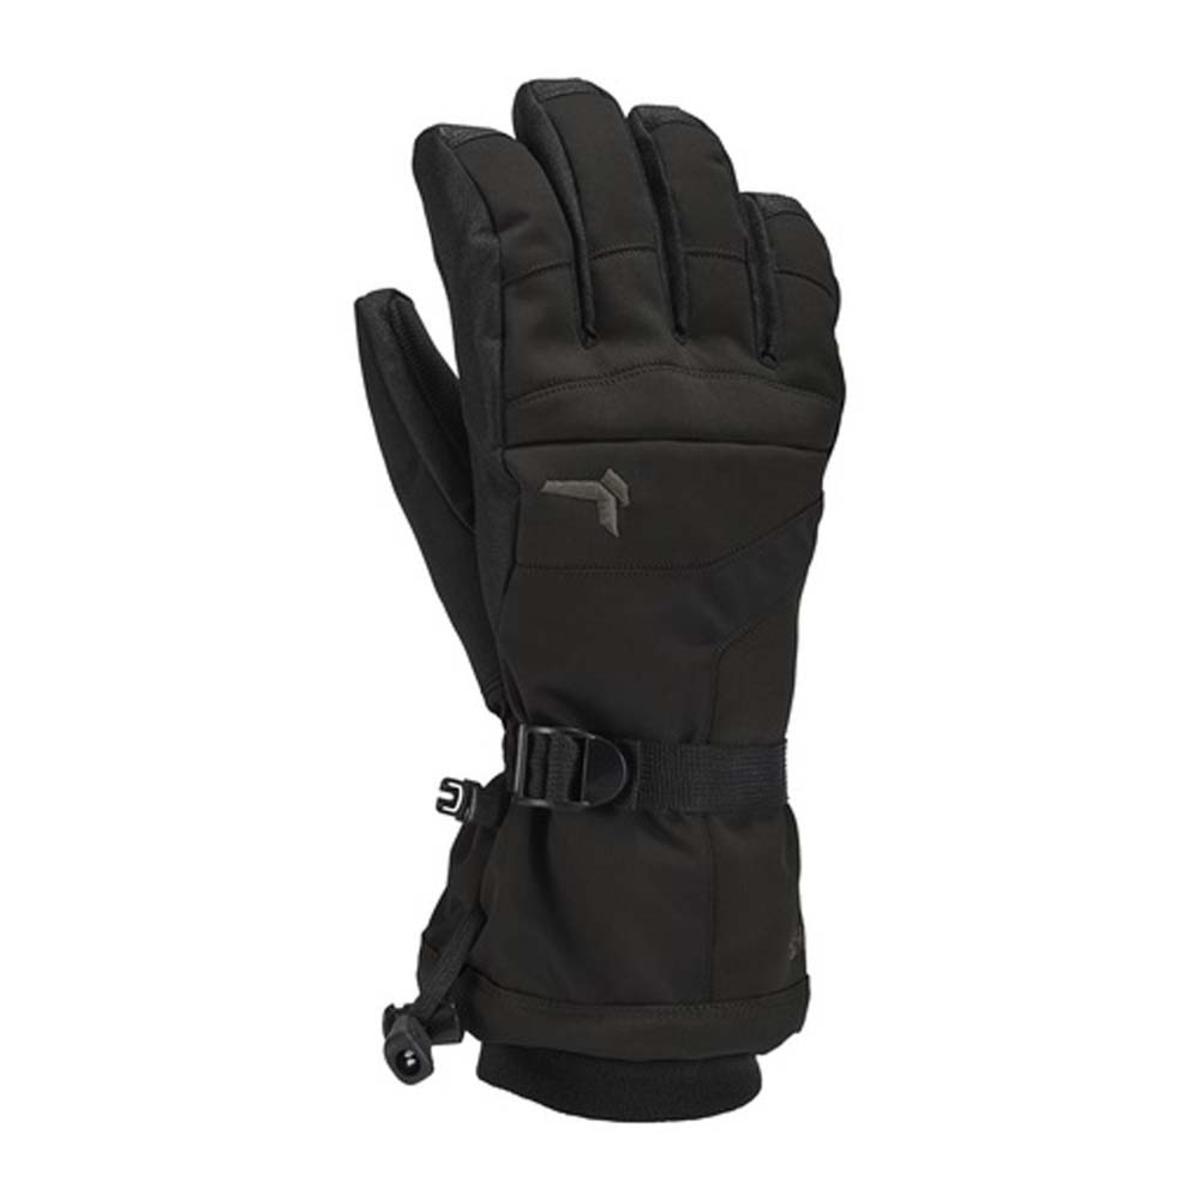 Kombi Men's Storm Cuff Gloves